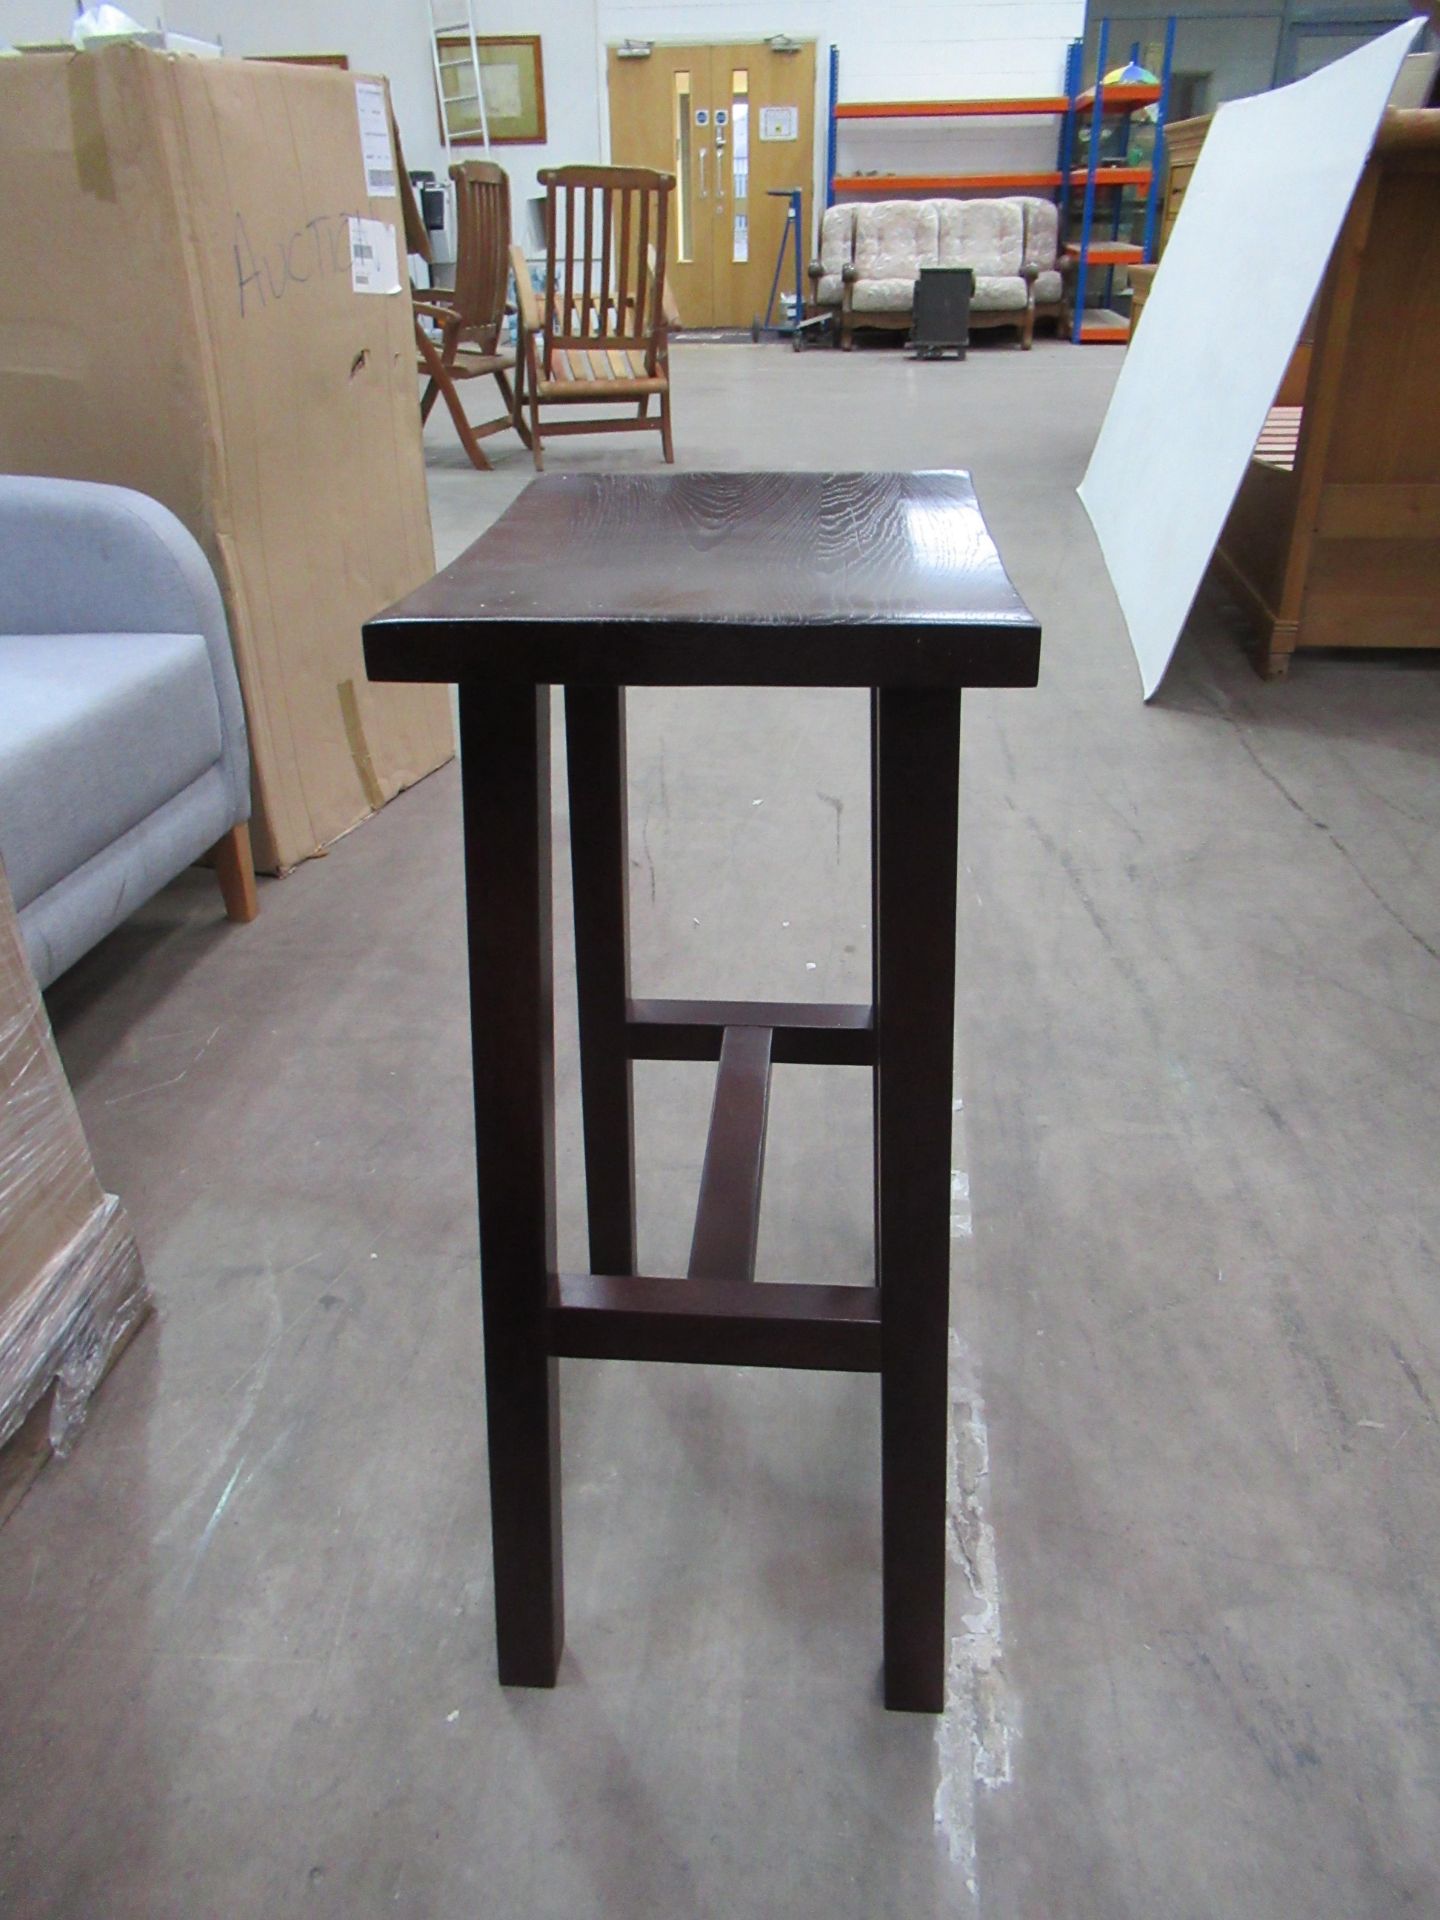 6x 'Tokyo' kitchen stools in mahogany finish - Image 2 of 3